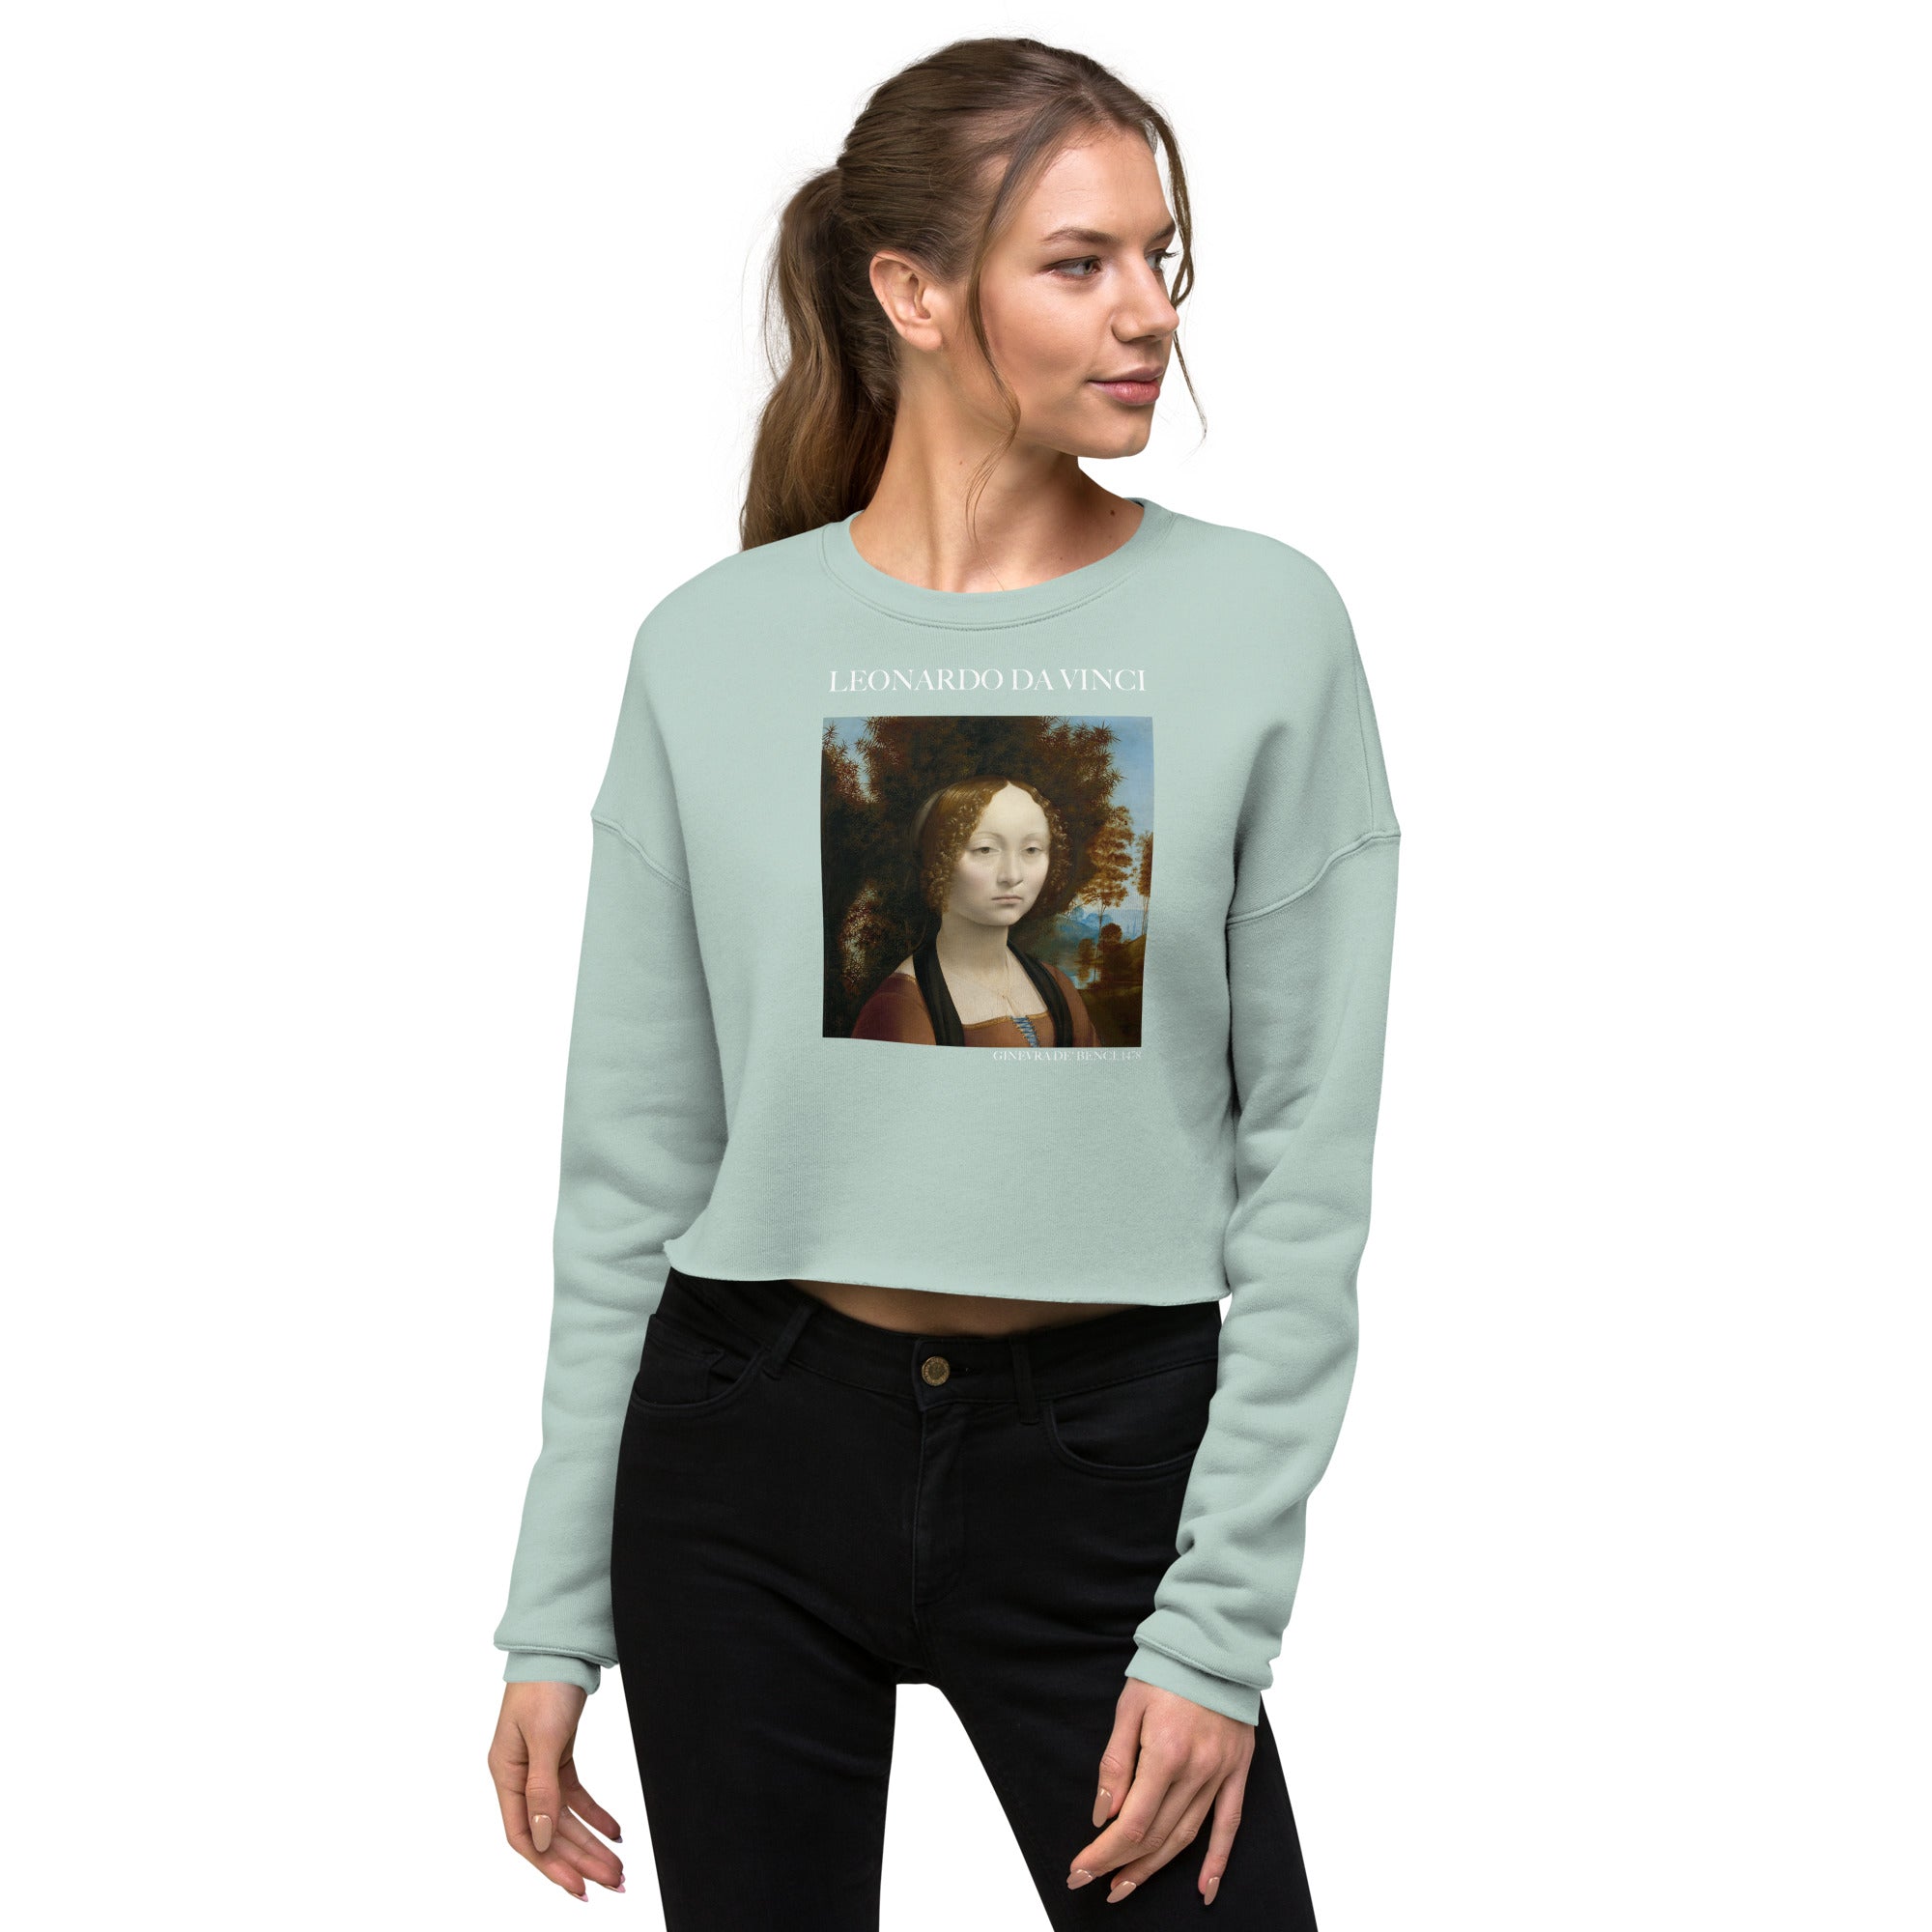 Leonardo da Vinci 'Ginevra de' Benci' Famous Painting Cropped Sweatshirt | Premium Art Cropped Sweatshirt